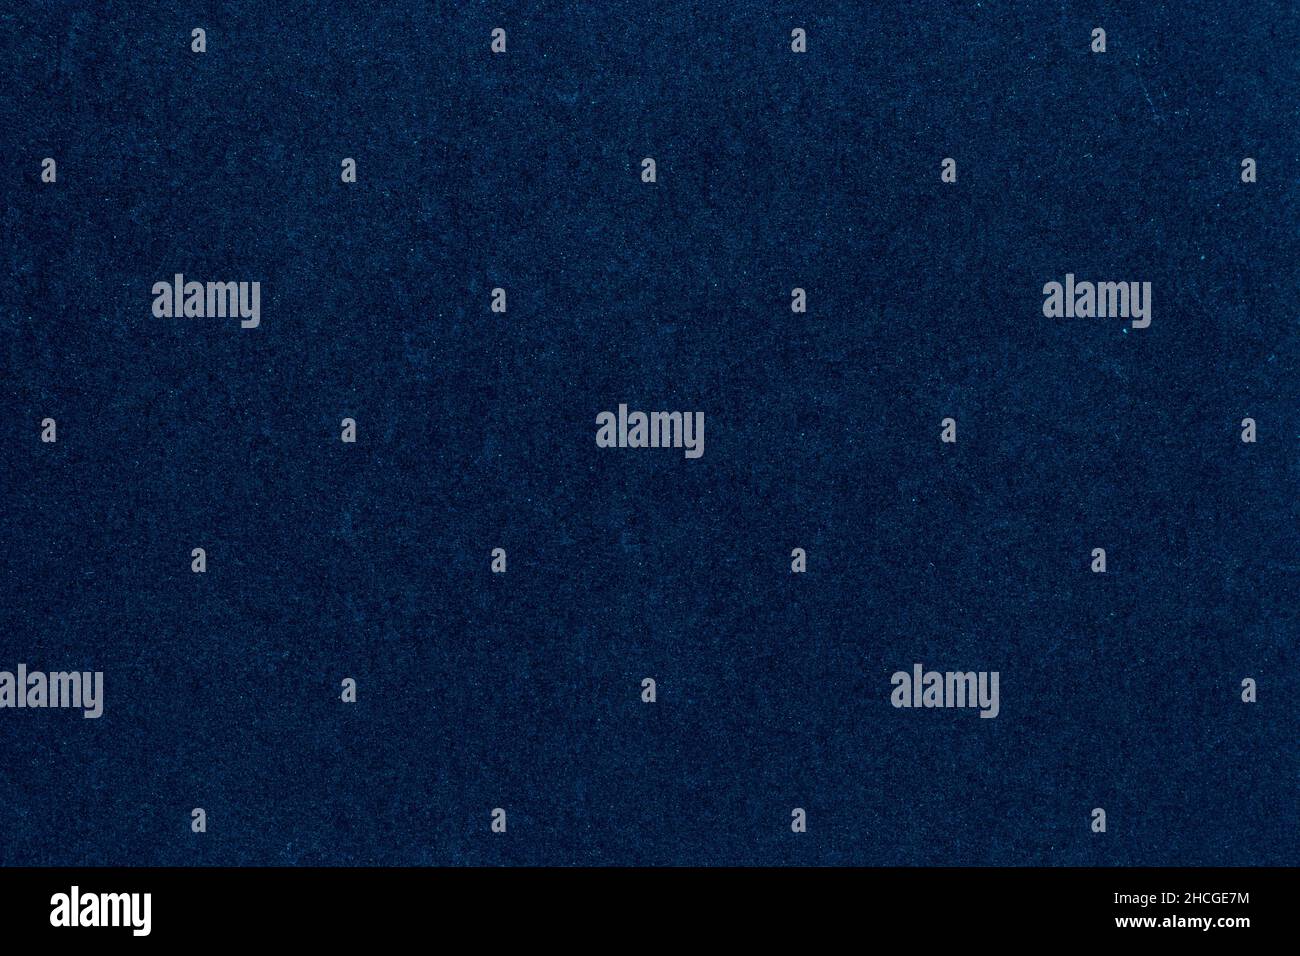 Color azul profundo fotografías e imágenes de alta resolución - Alamy